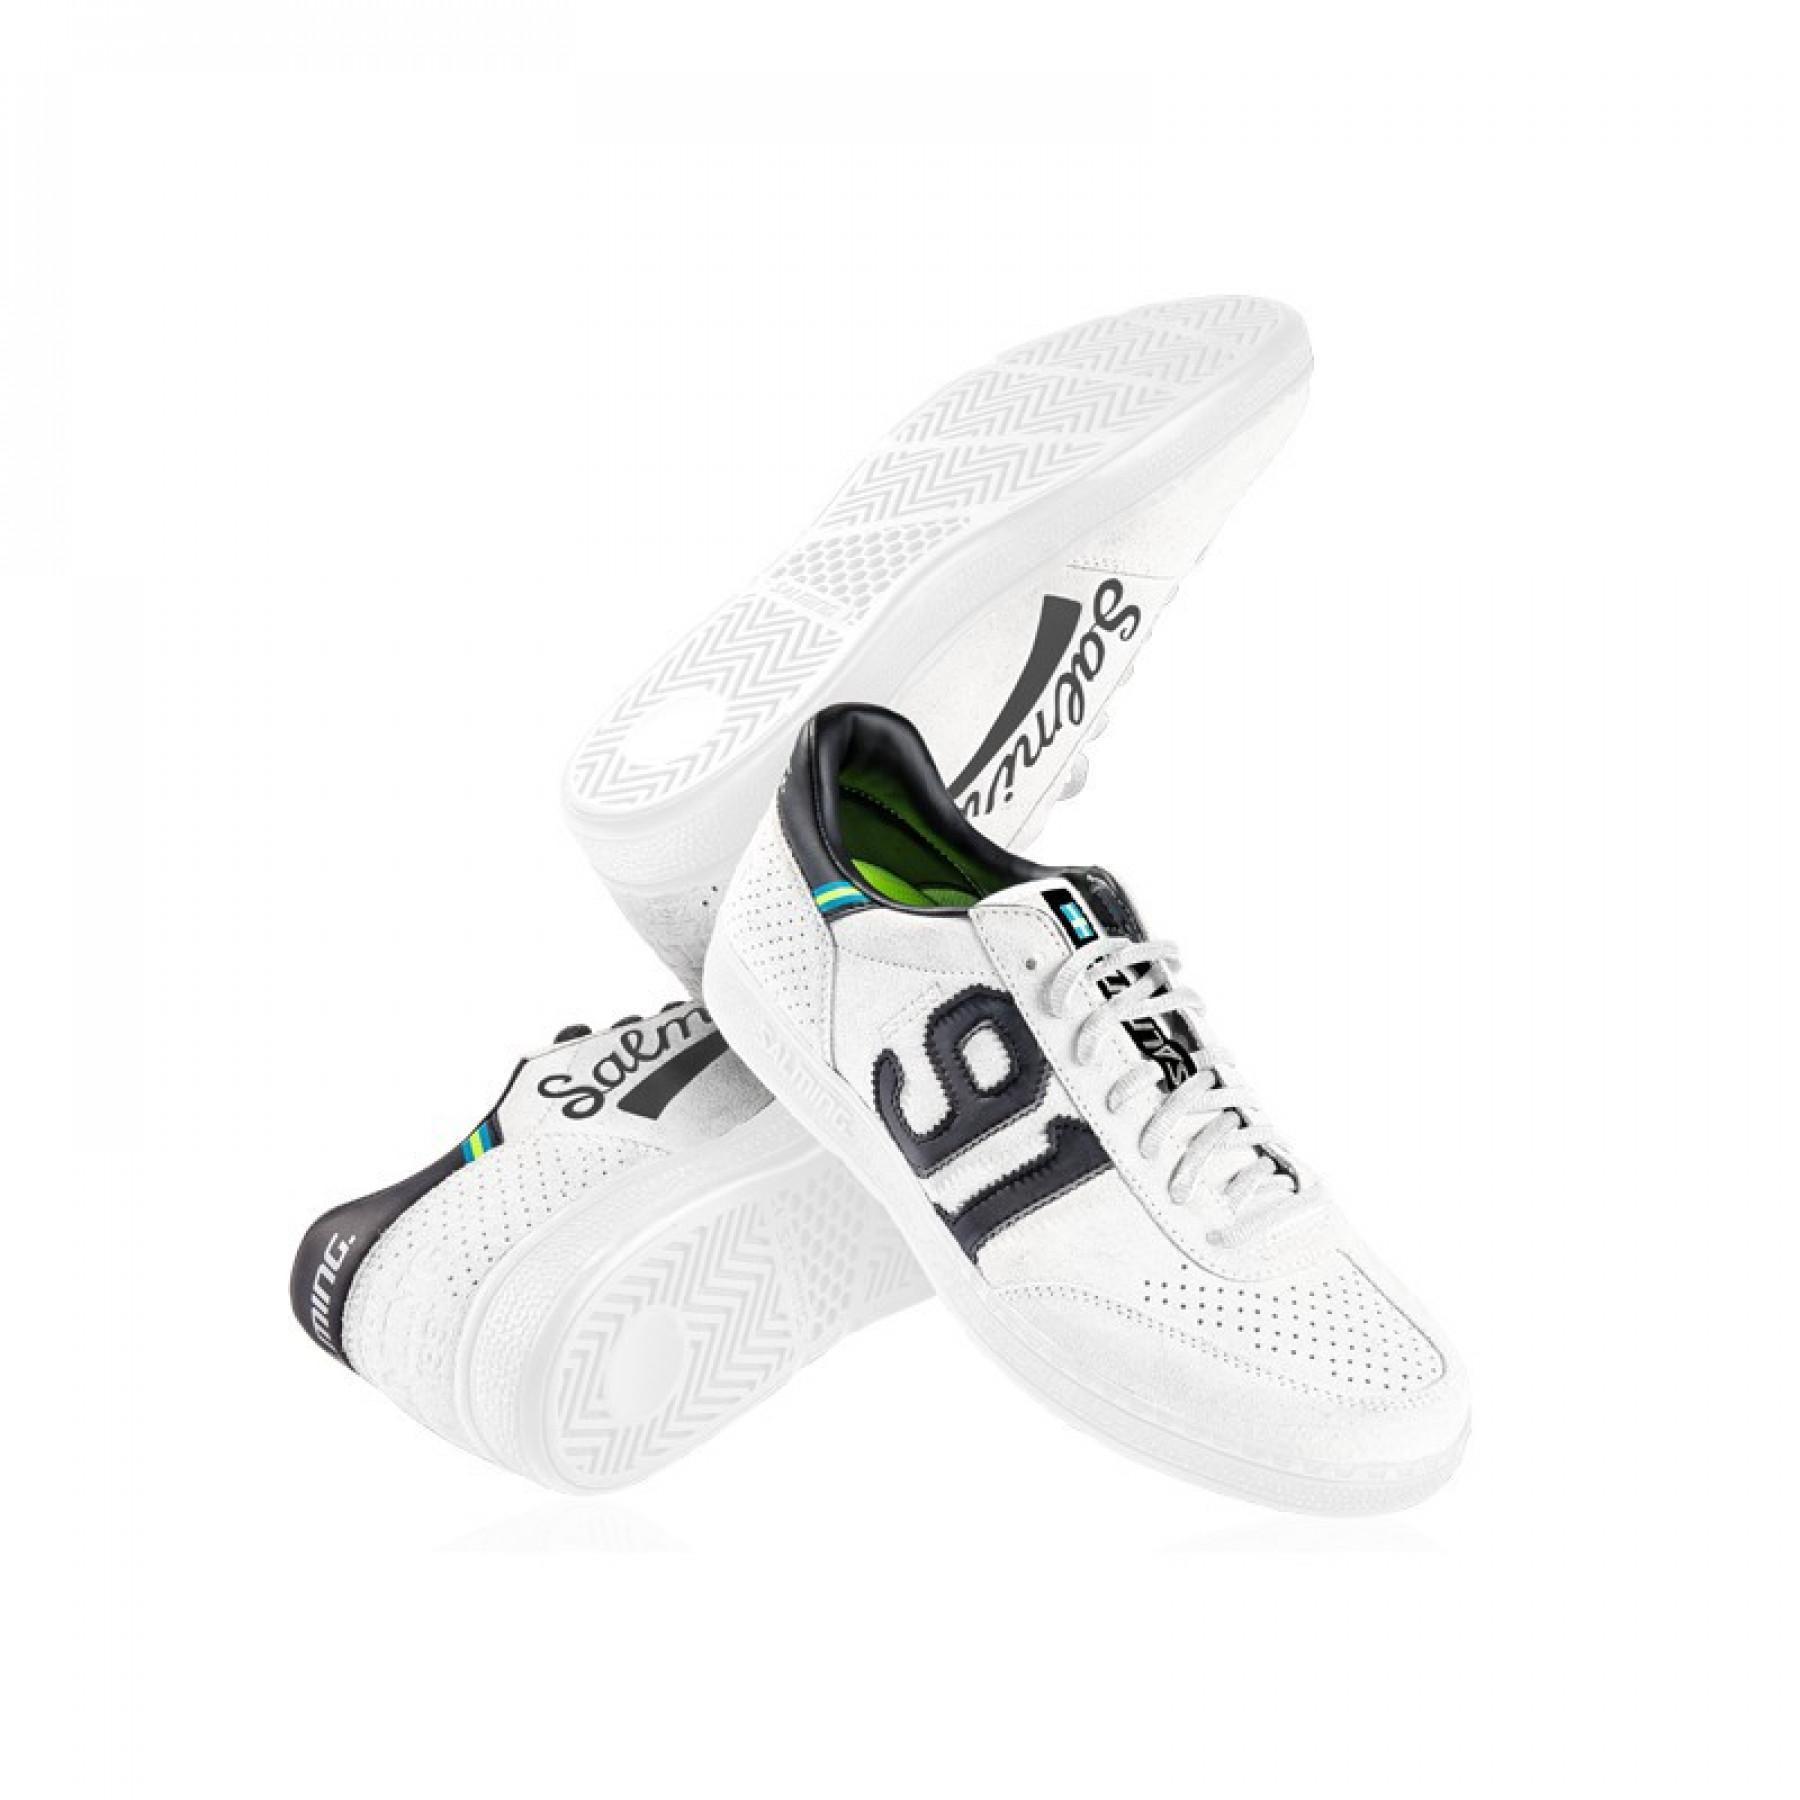 Shoes Salming 91 Goalie Cuir Blanc